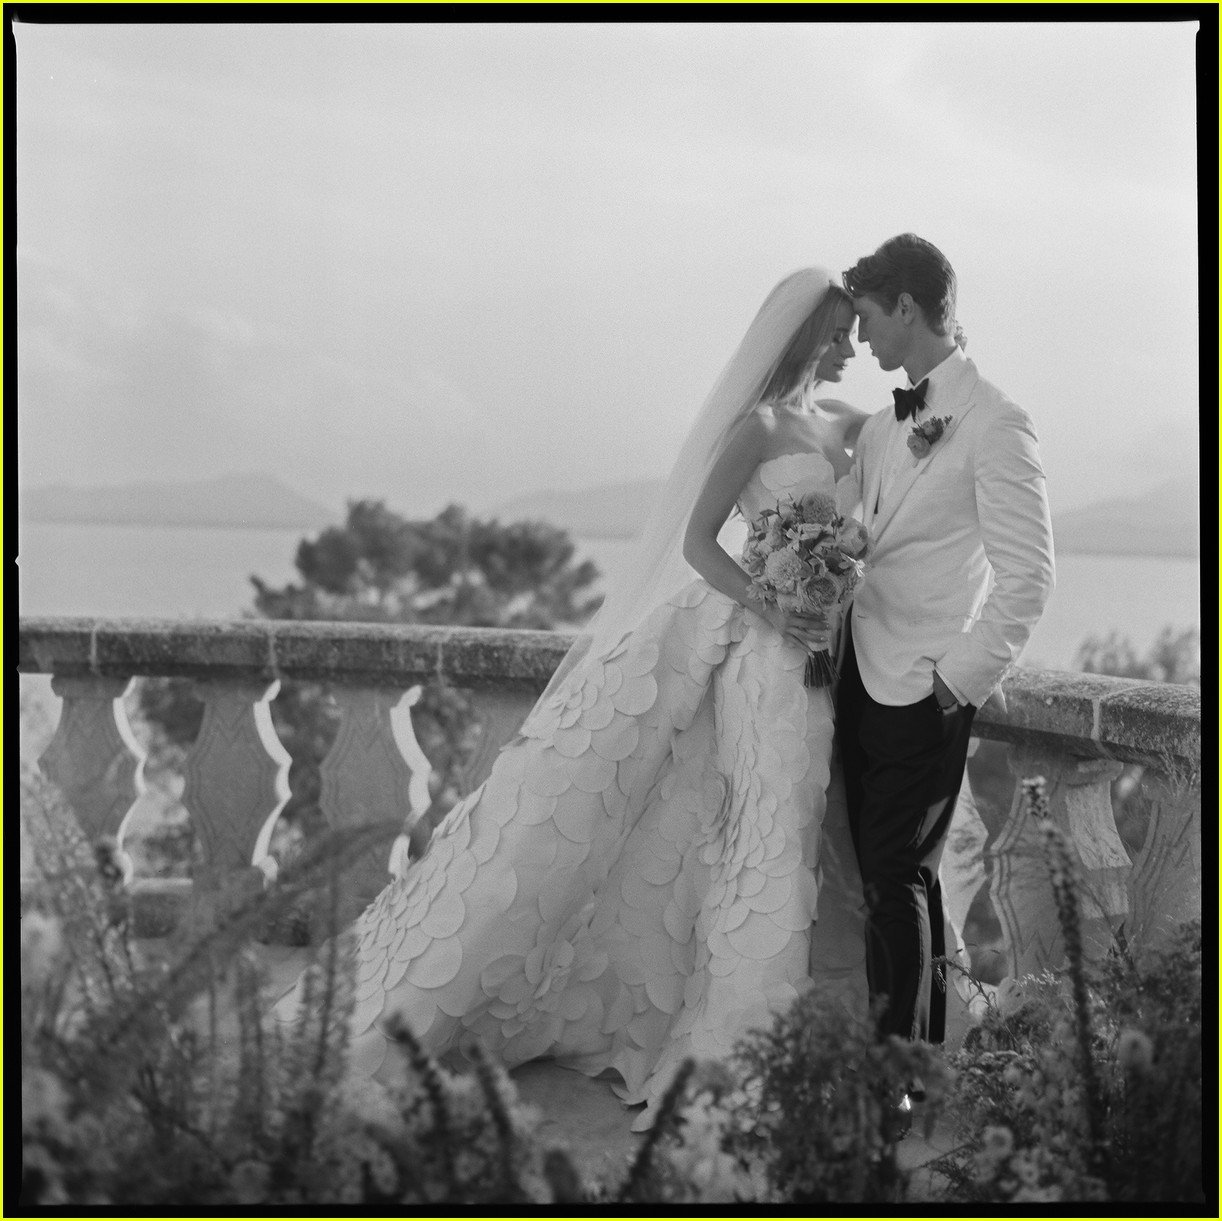 joey king steven piet wedding photos details revealed 63